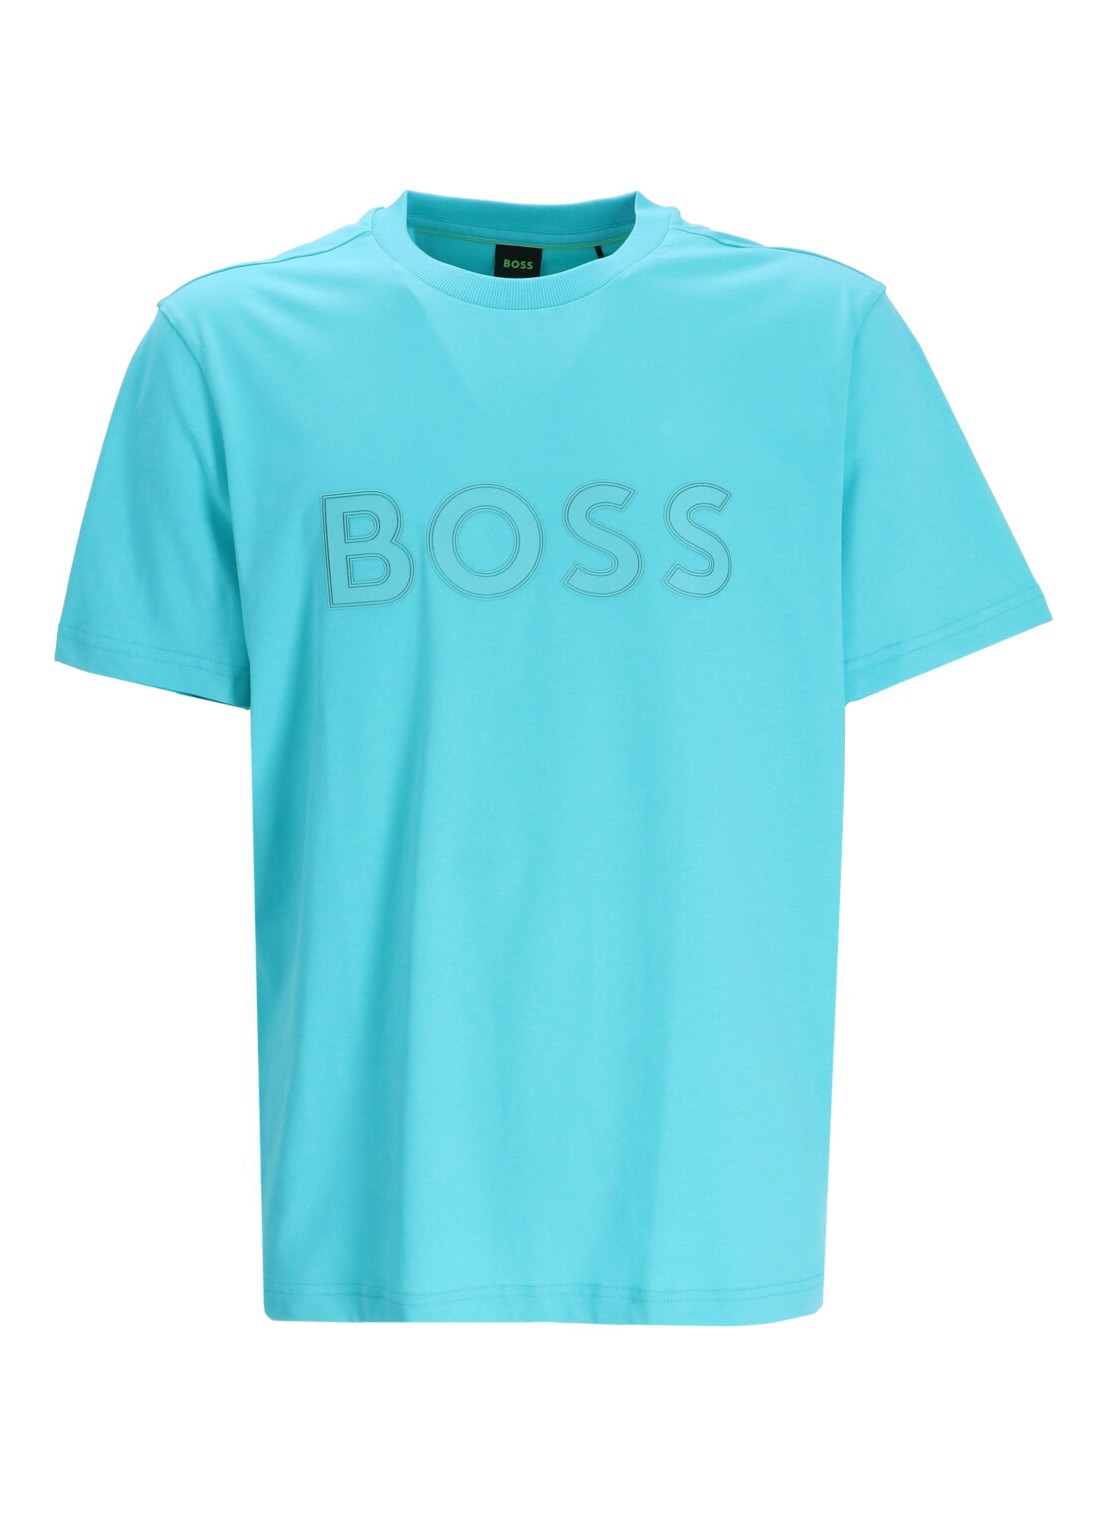 Camiseta boss t-shirt mantee 1 - 50506344 367 talla XXL
 